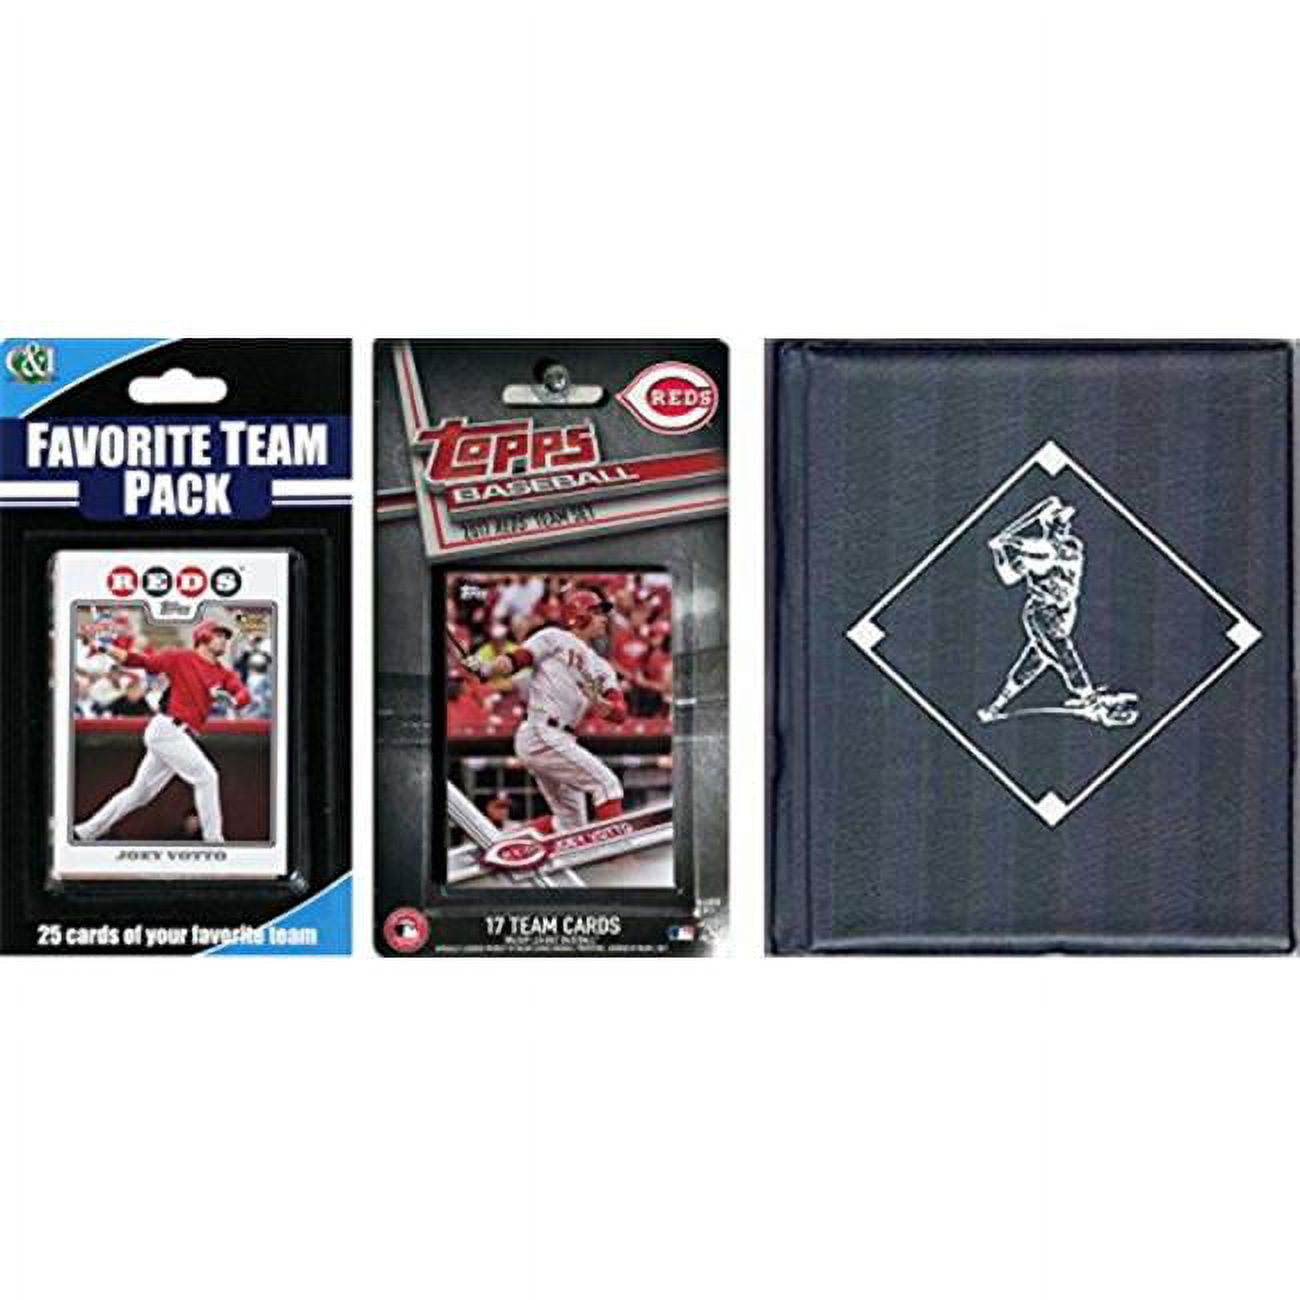 C & I Collectables 2017REDSTSC MLB Cincinnati Reds Licensed 2017 Topps Team Set & Favorite Player Trading Cards Plus Storage Album -  C & I Collectables Inc